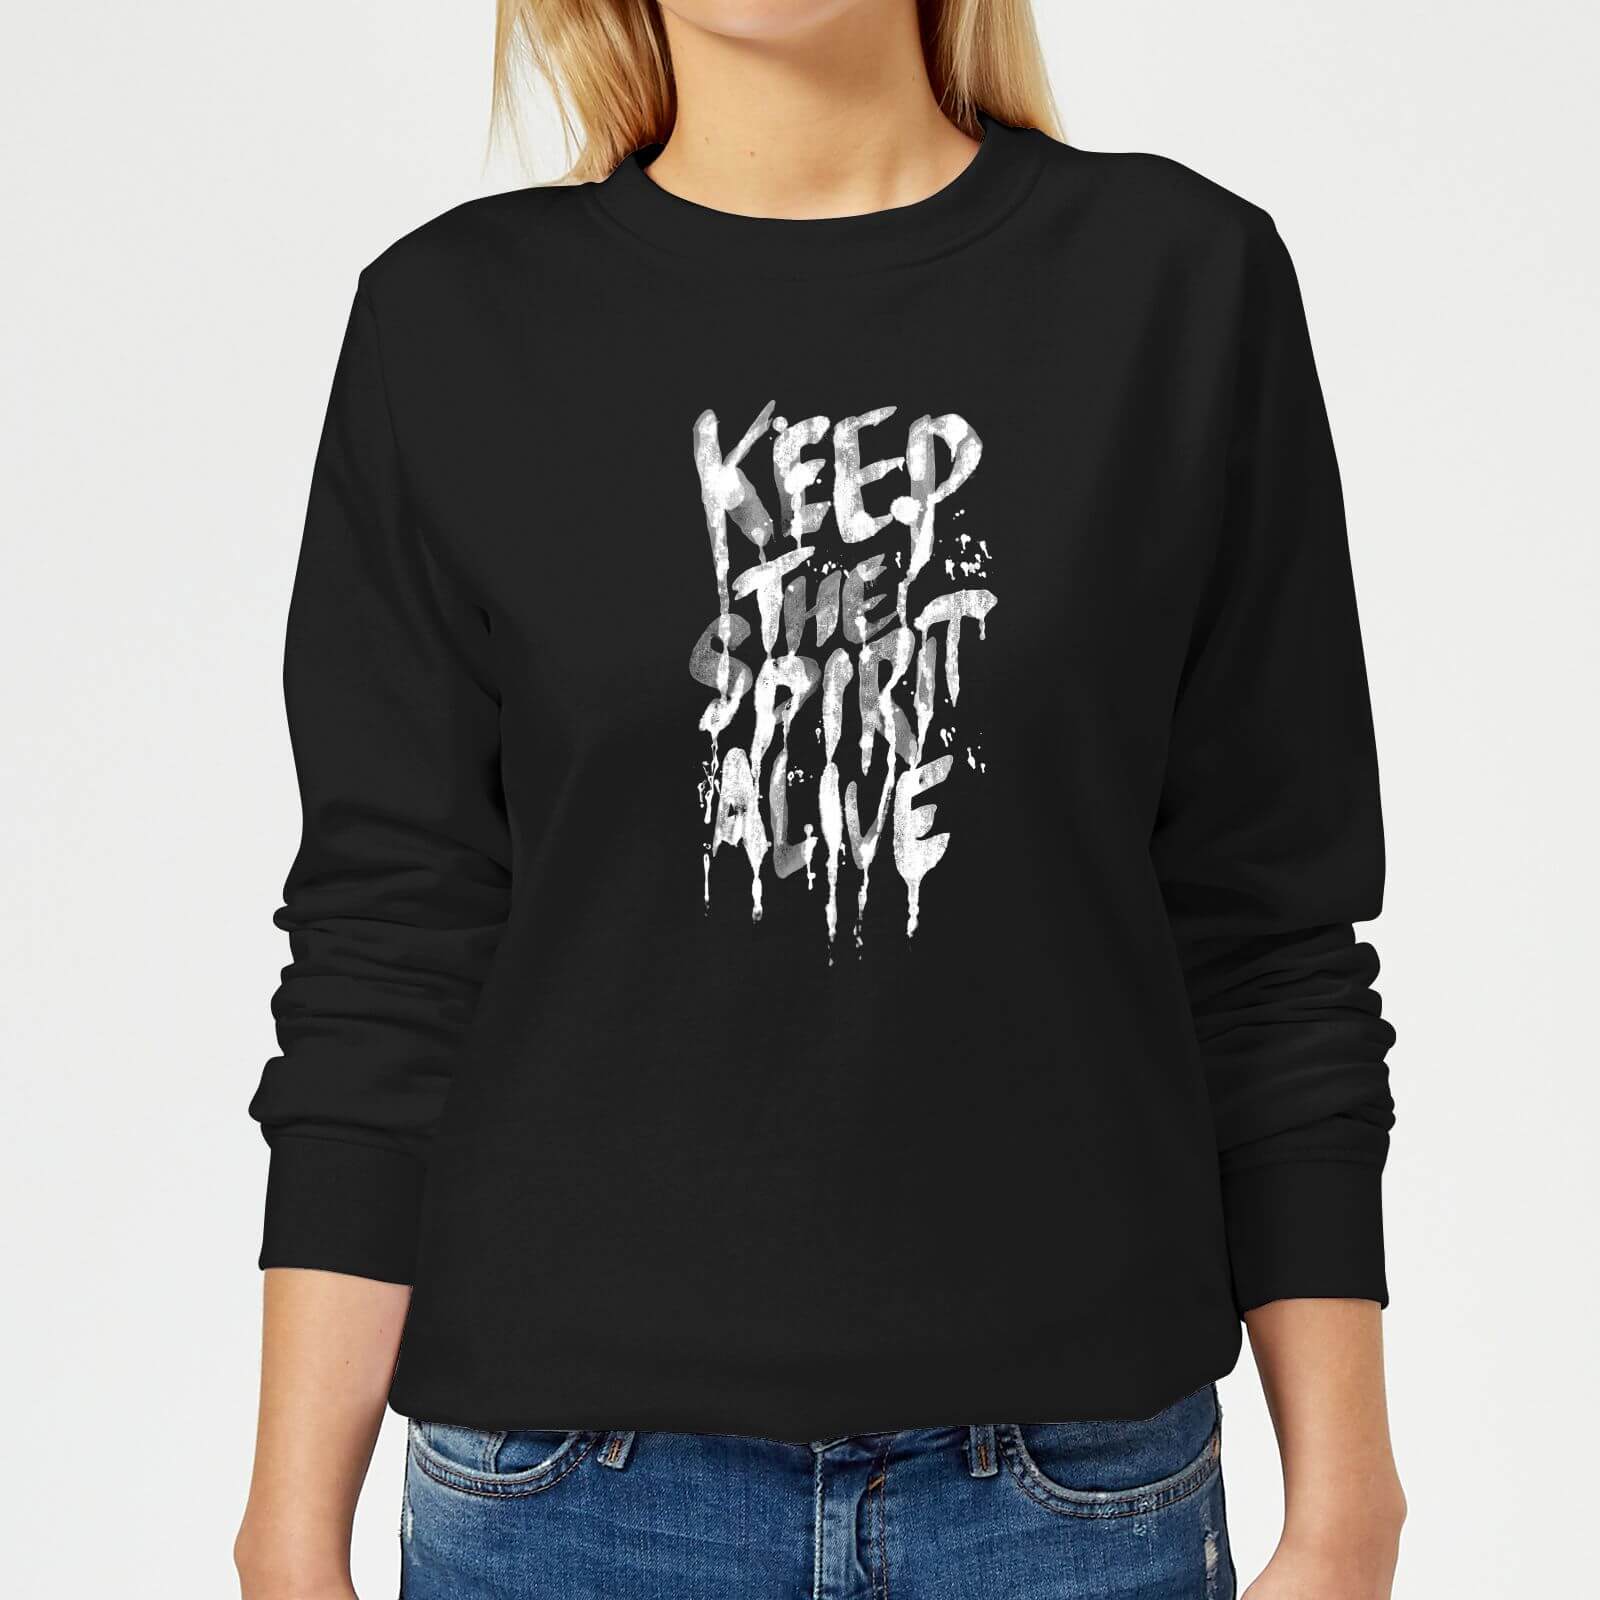 Ikiiki Keep The Spirit Alive Women's Sweatshirt - Black - XS - Black